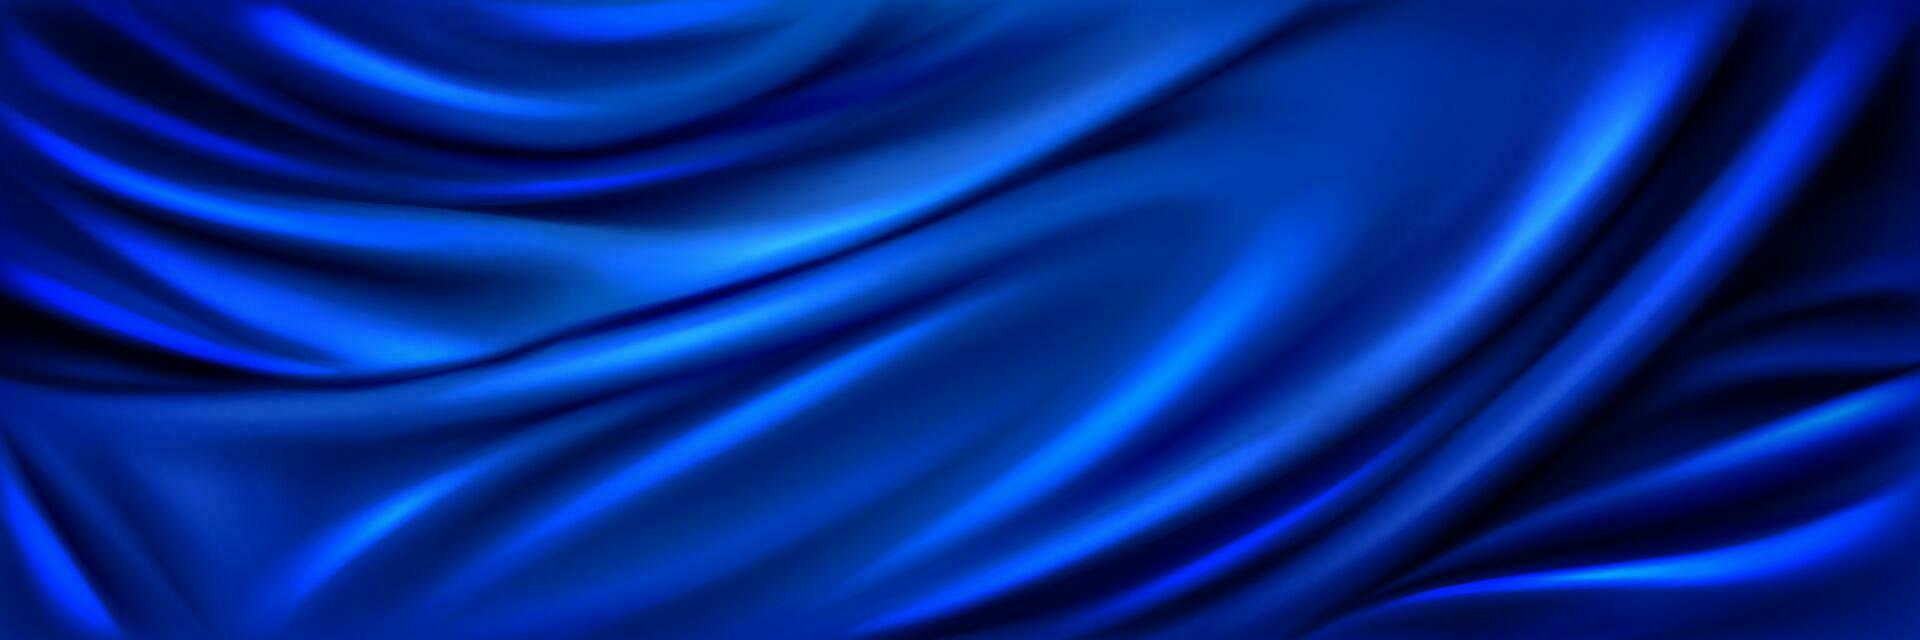 Blue silk fabric background, satin cloth texture vector